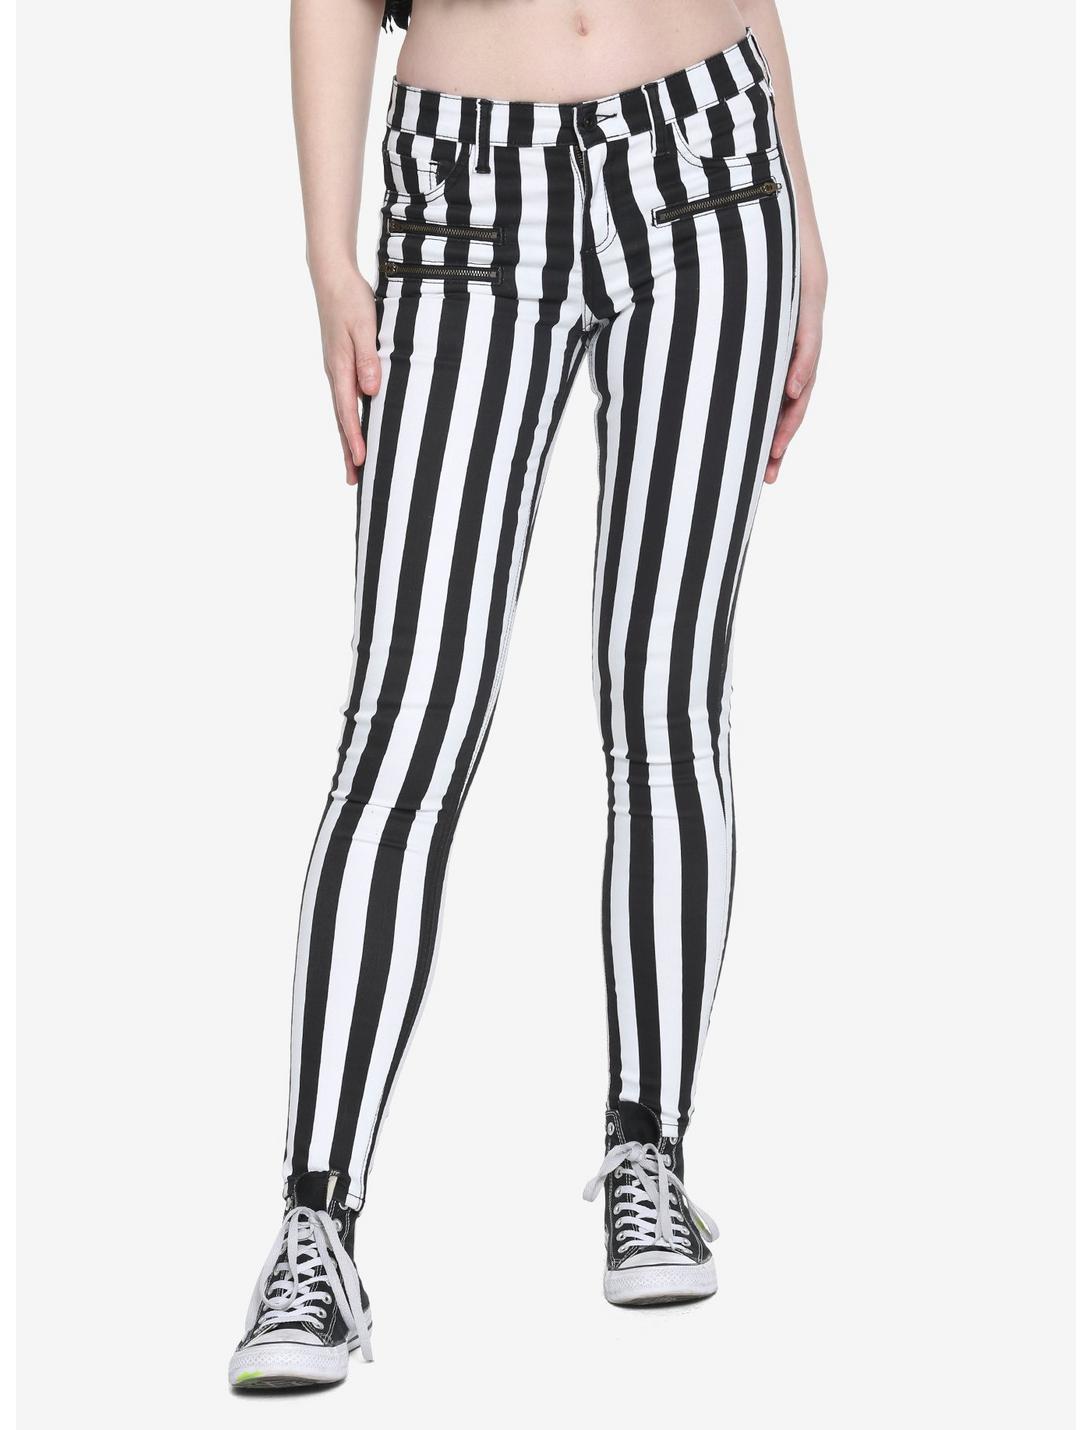 Blackheart Black & White Stripe Zippered Stingerette Jeans, BLACK-WHITE STRIPE, hi-res